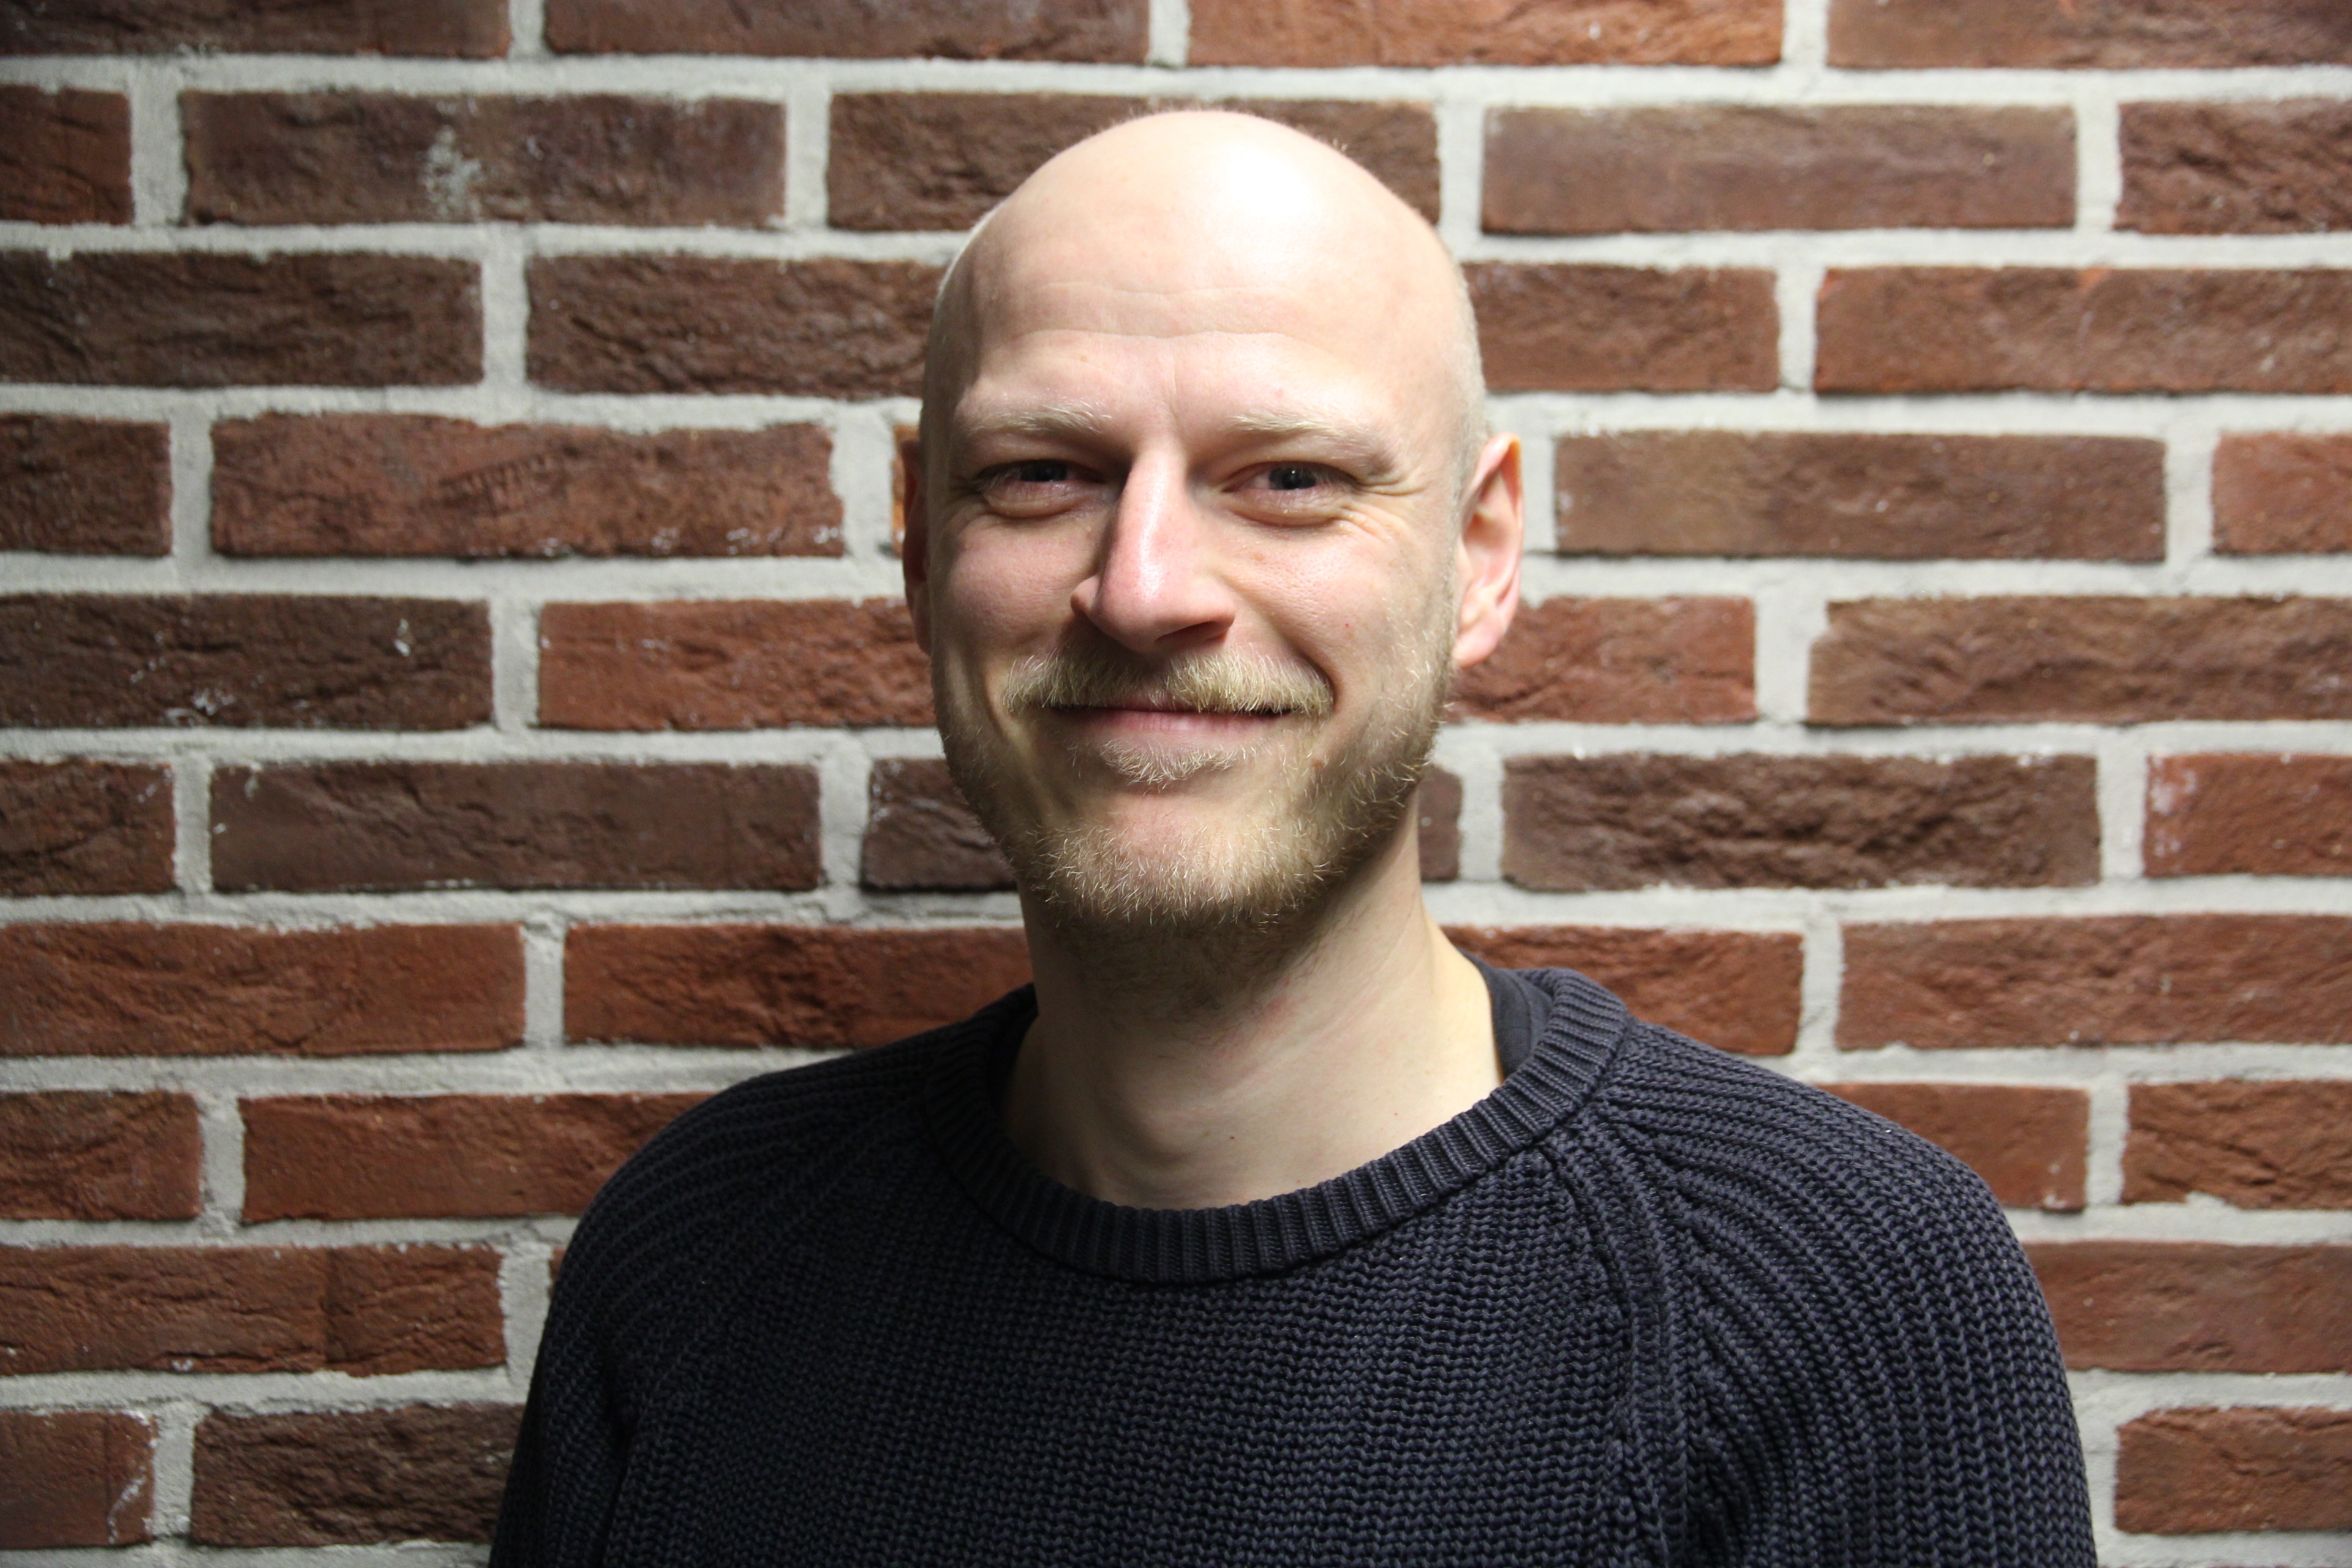 This image shows Lars Kälber